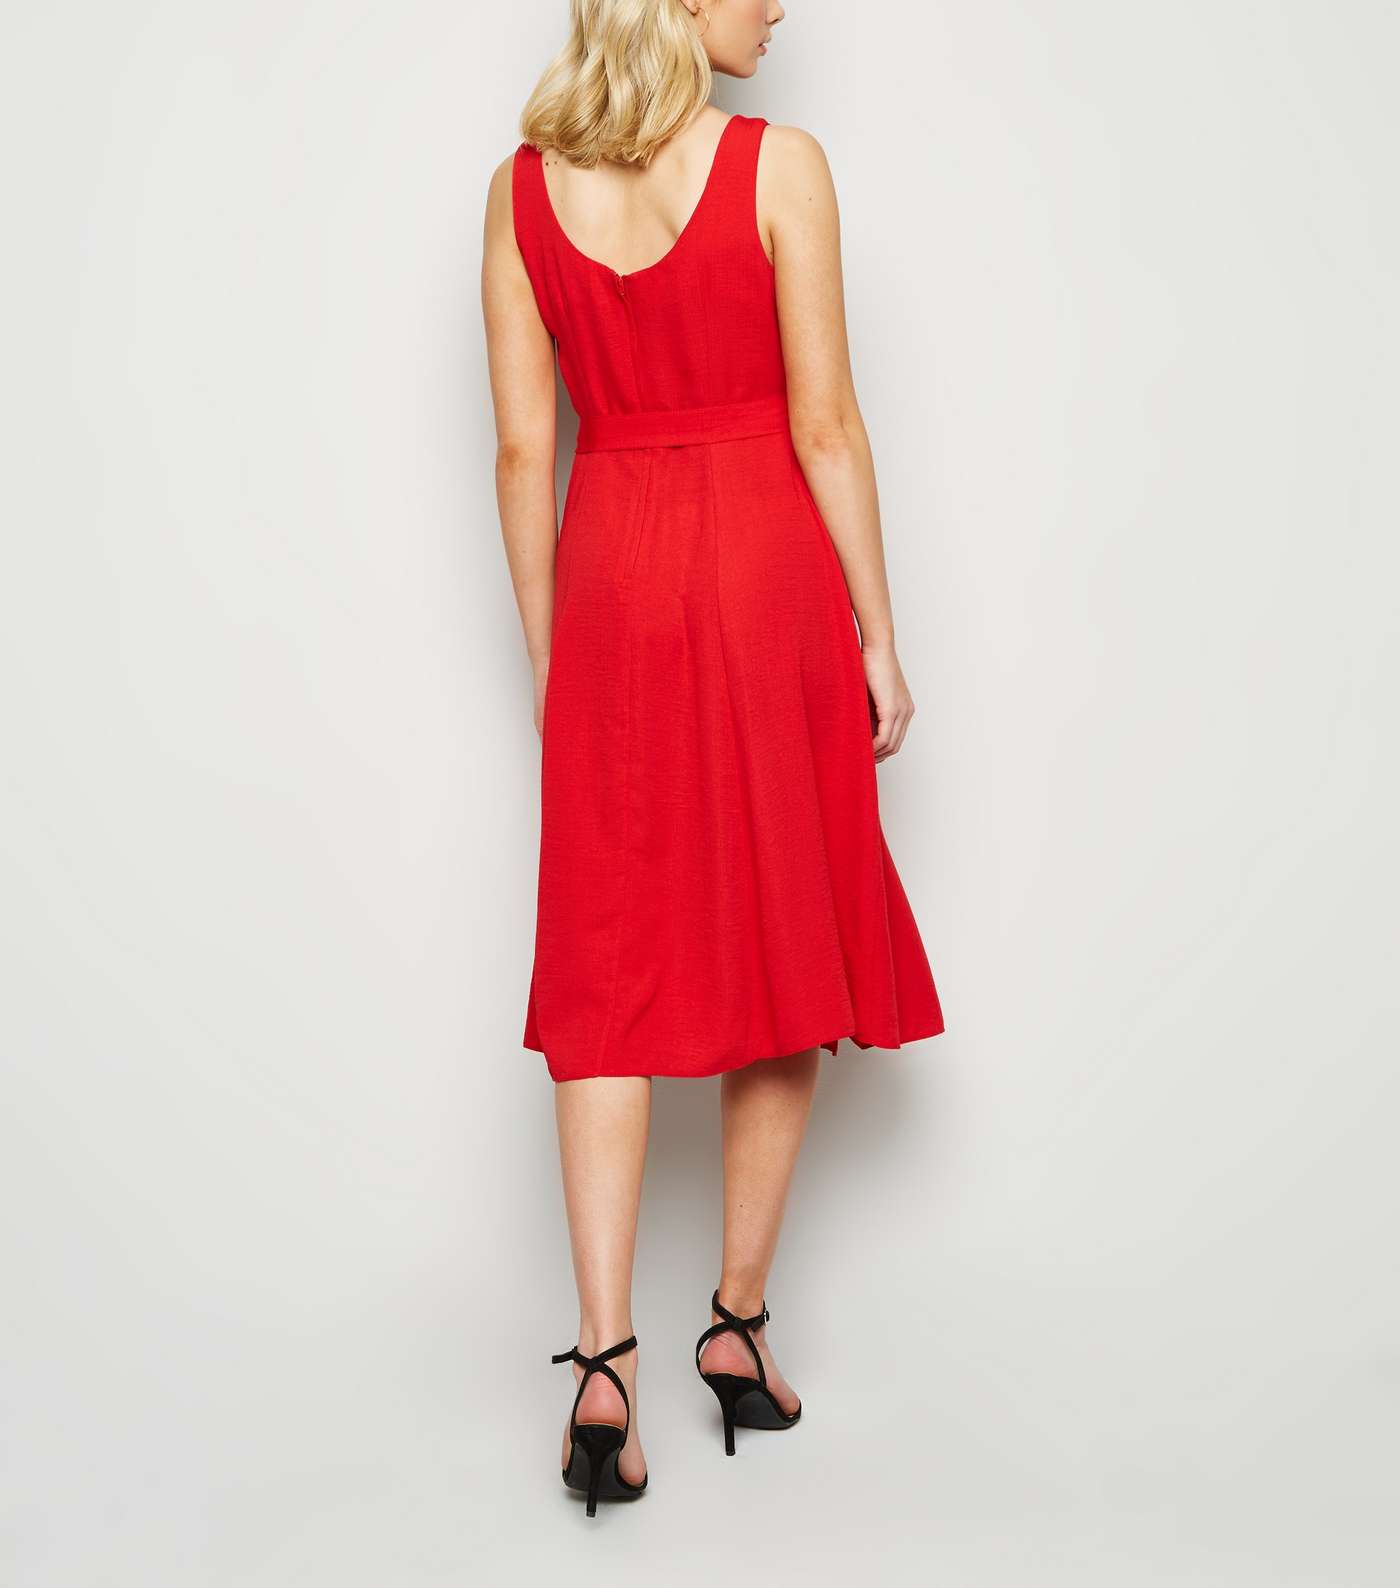 Apricot Red Plain Skater Dress Image 3